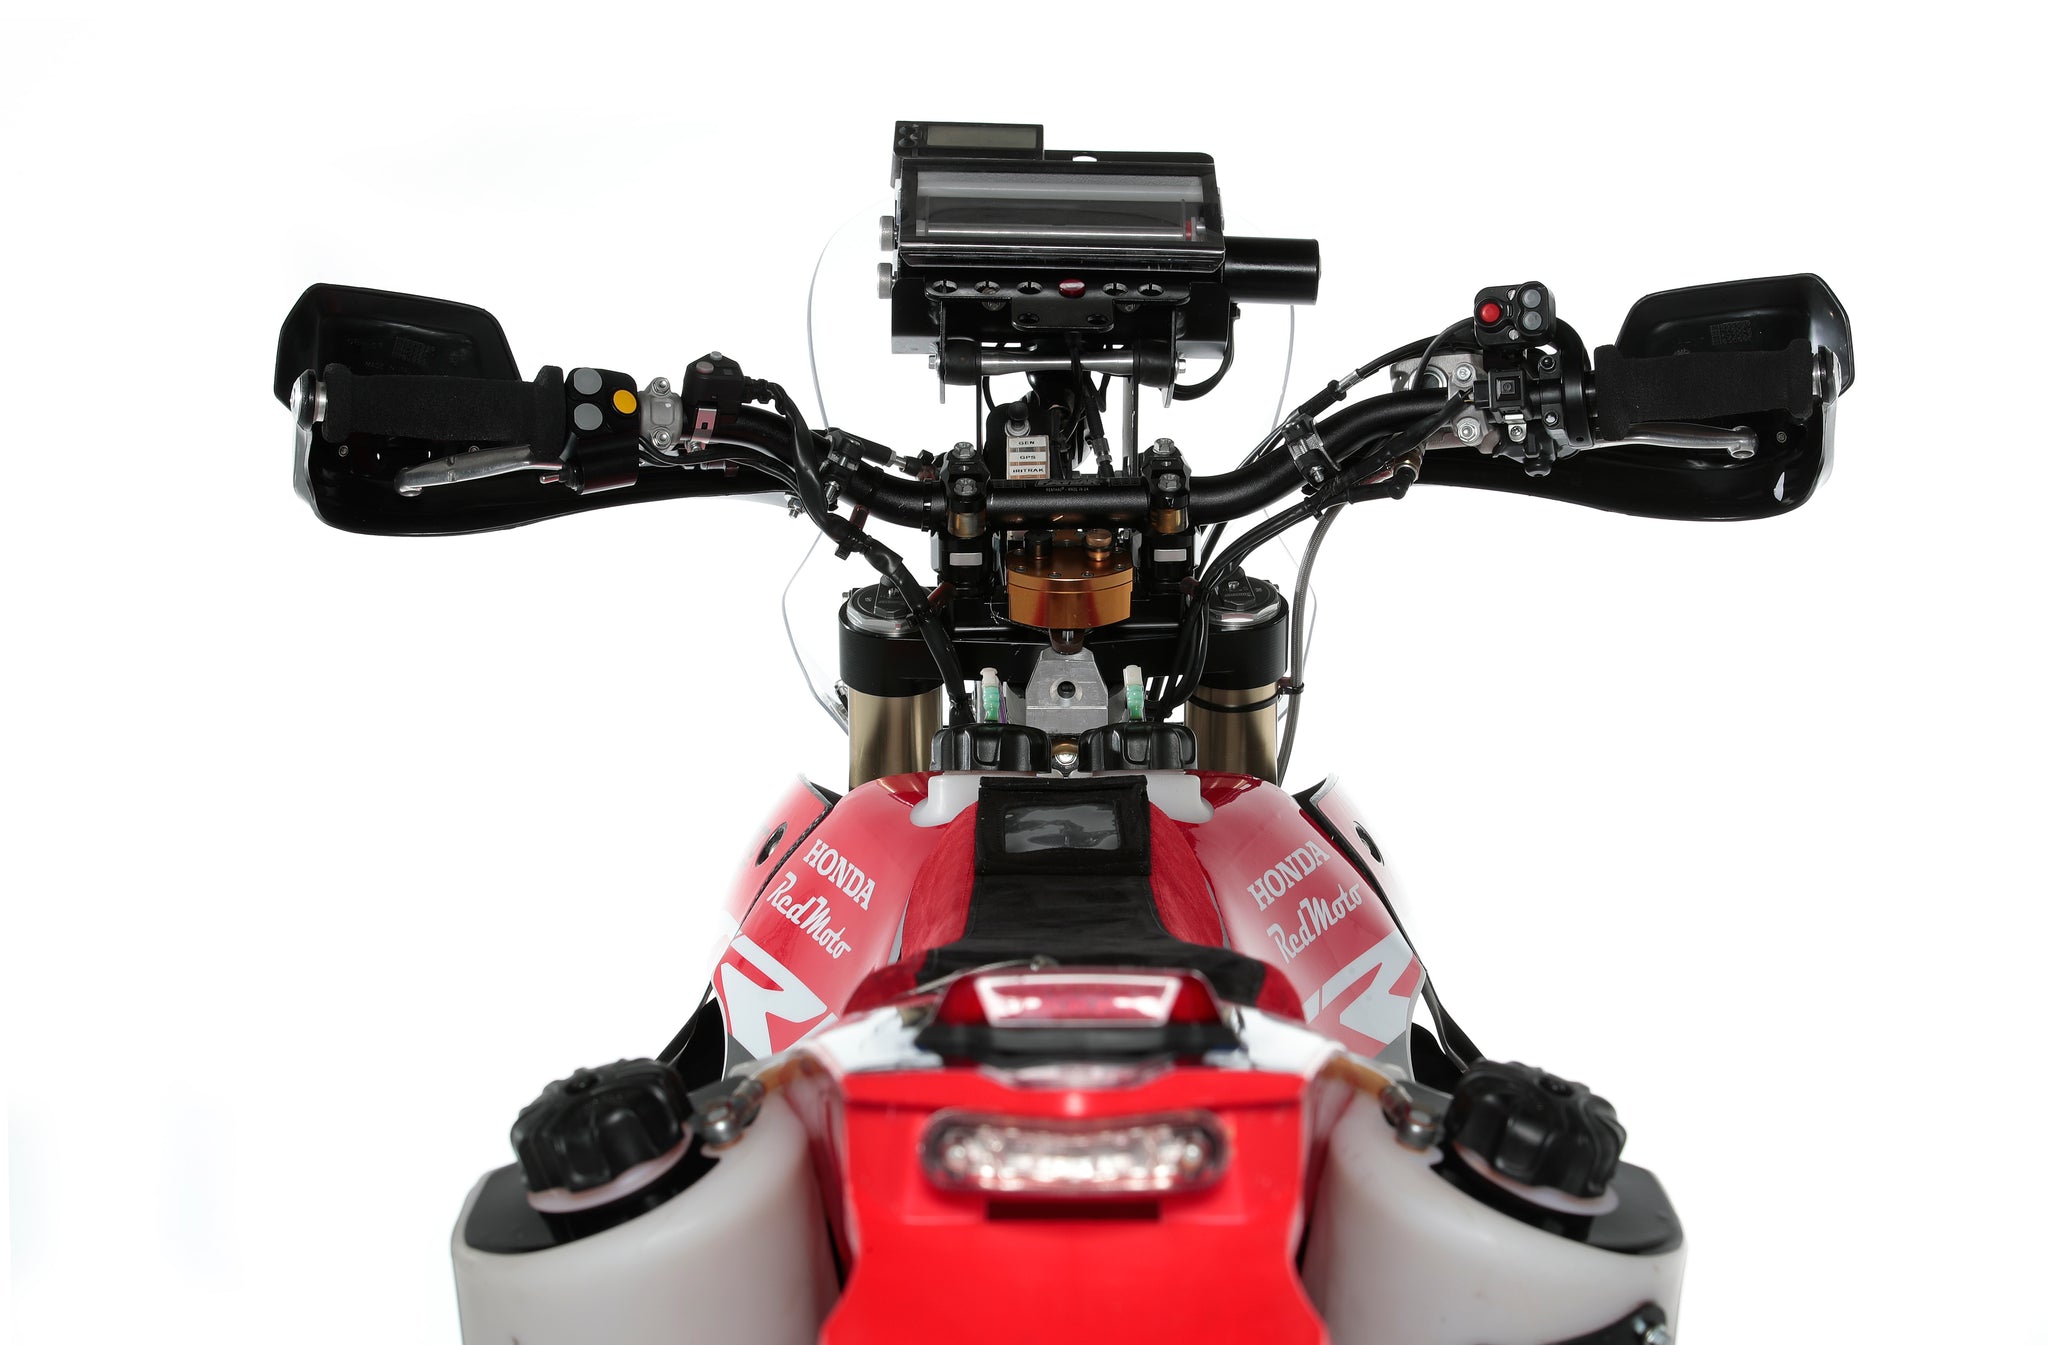 RS Moto Rally Kit for Honda CRF 450rx